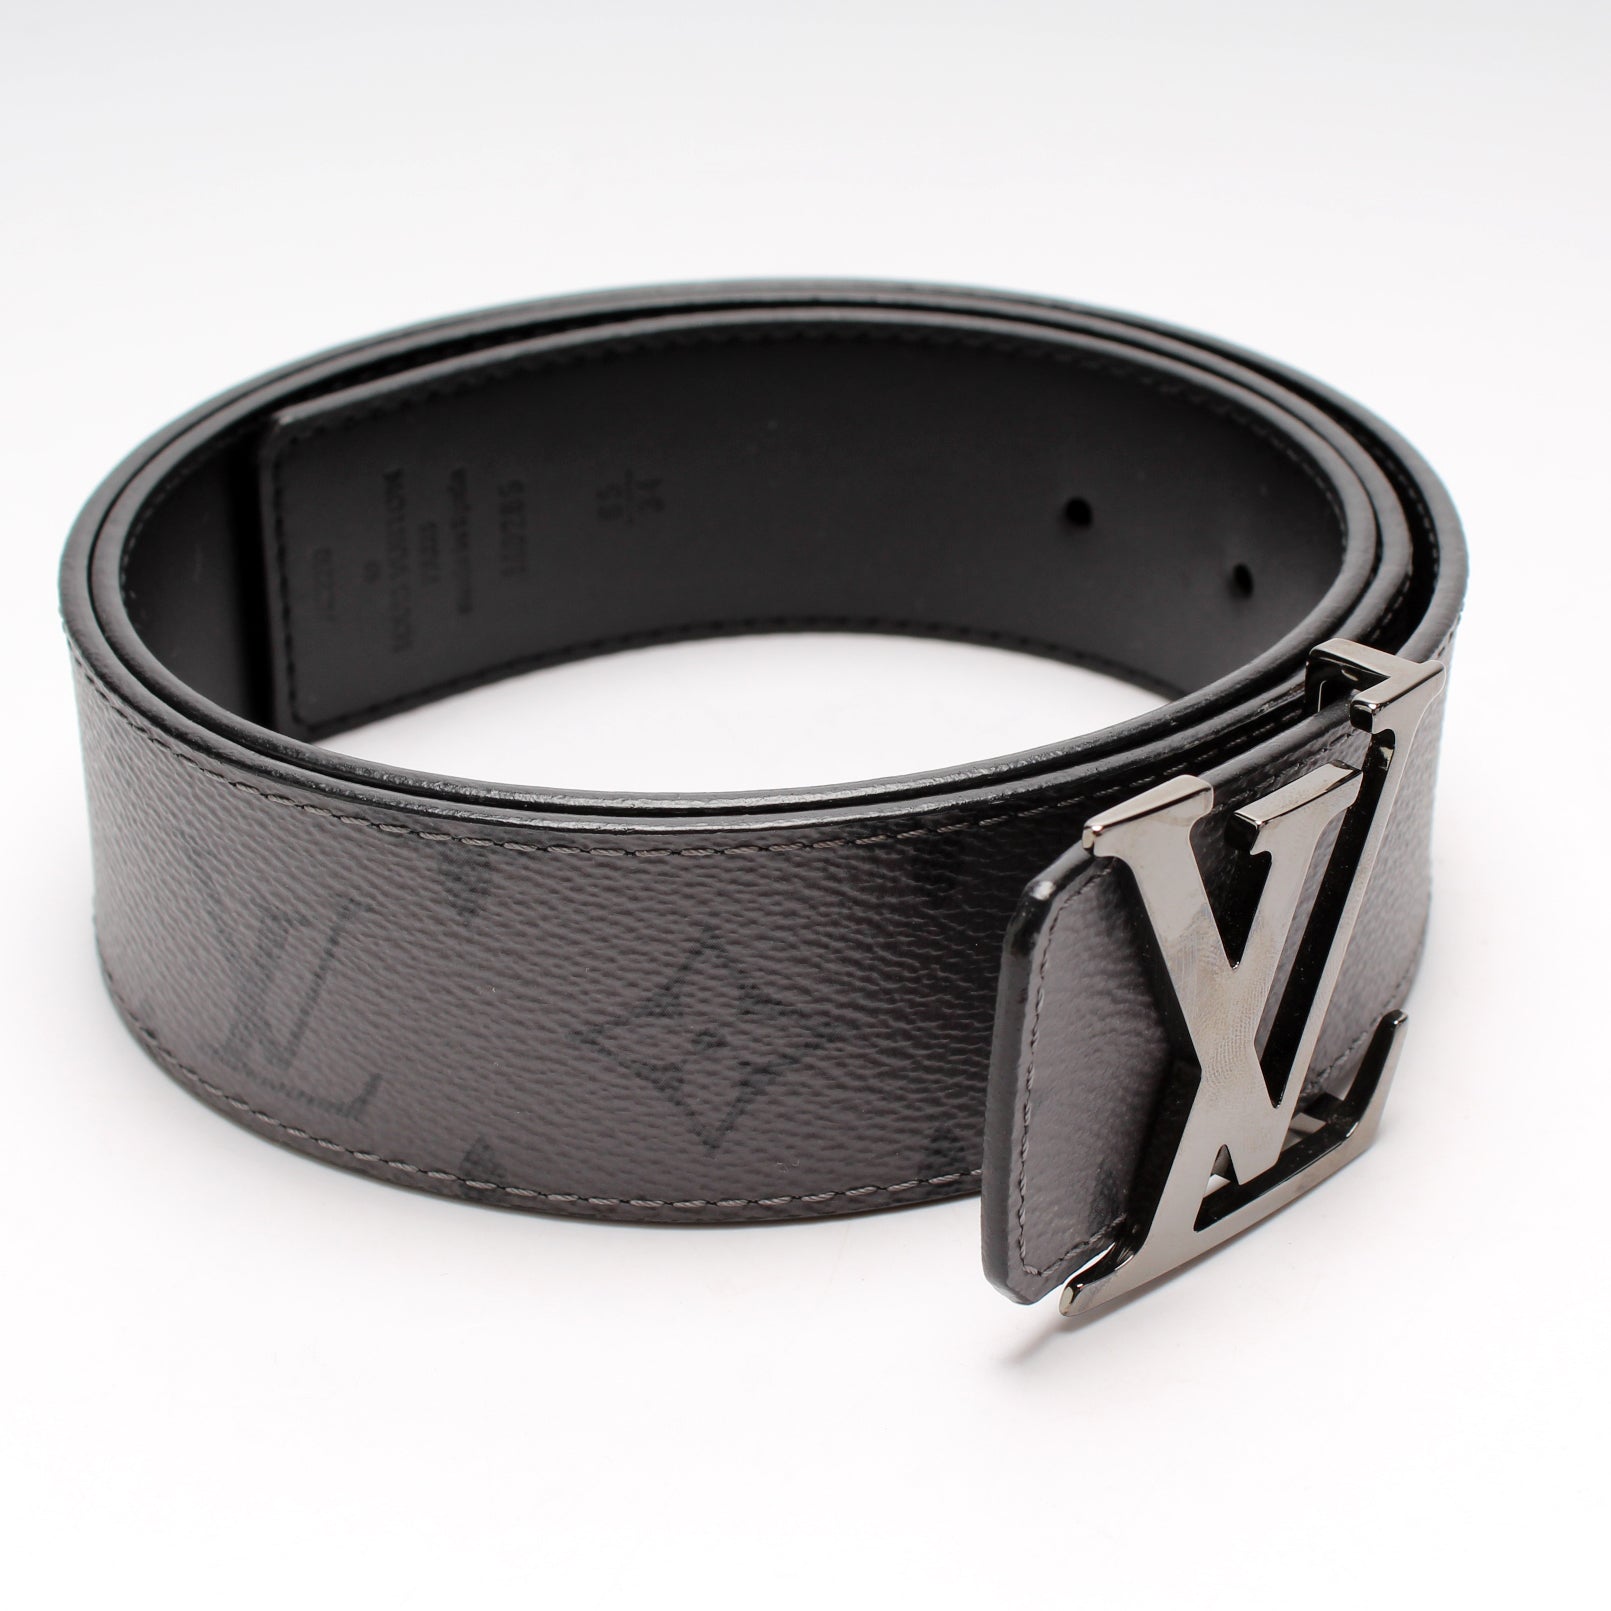 Louis Vuitton Men's belt 85/34